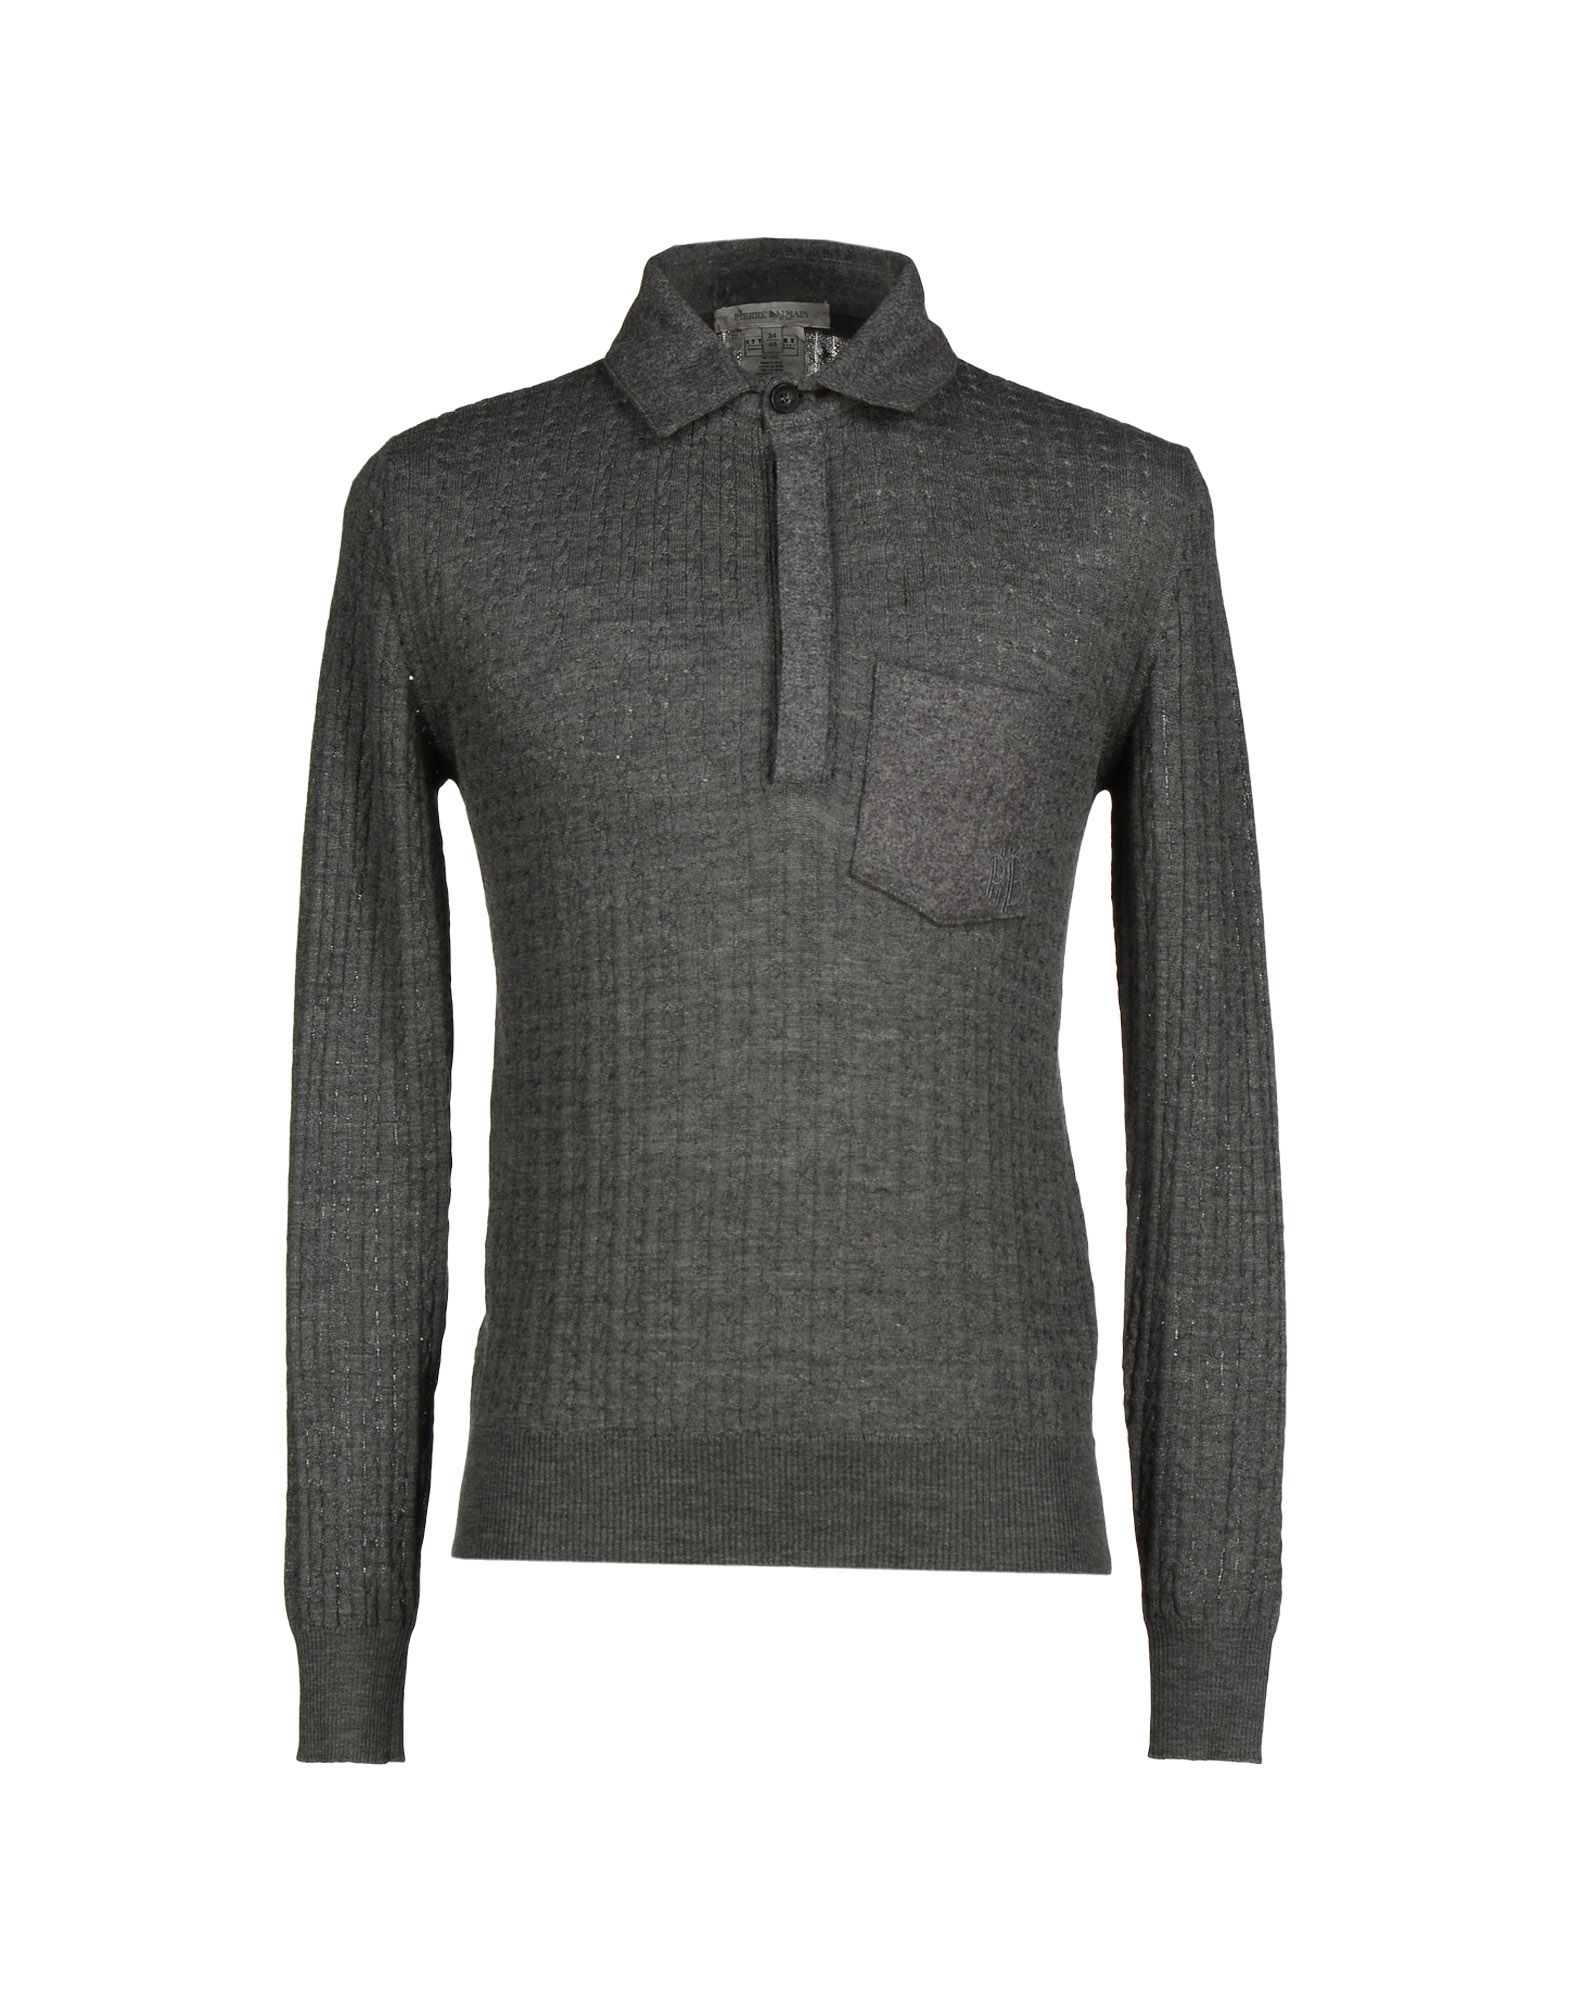 Lyst - Balmain Sweater in Gray for Men